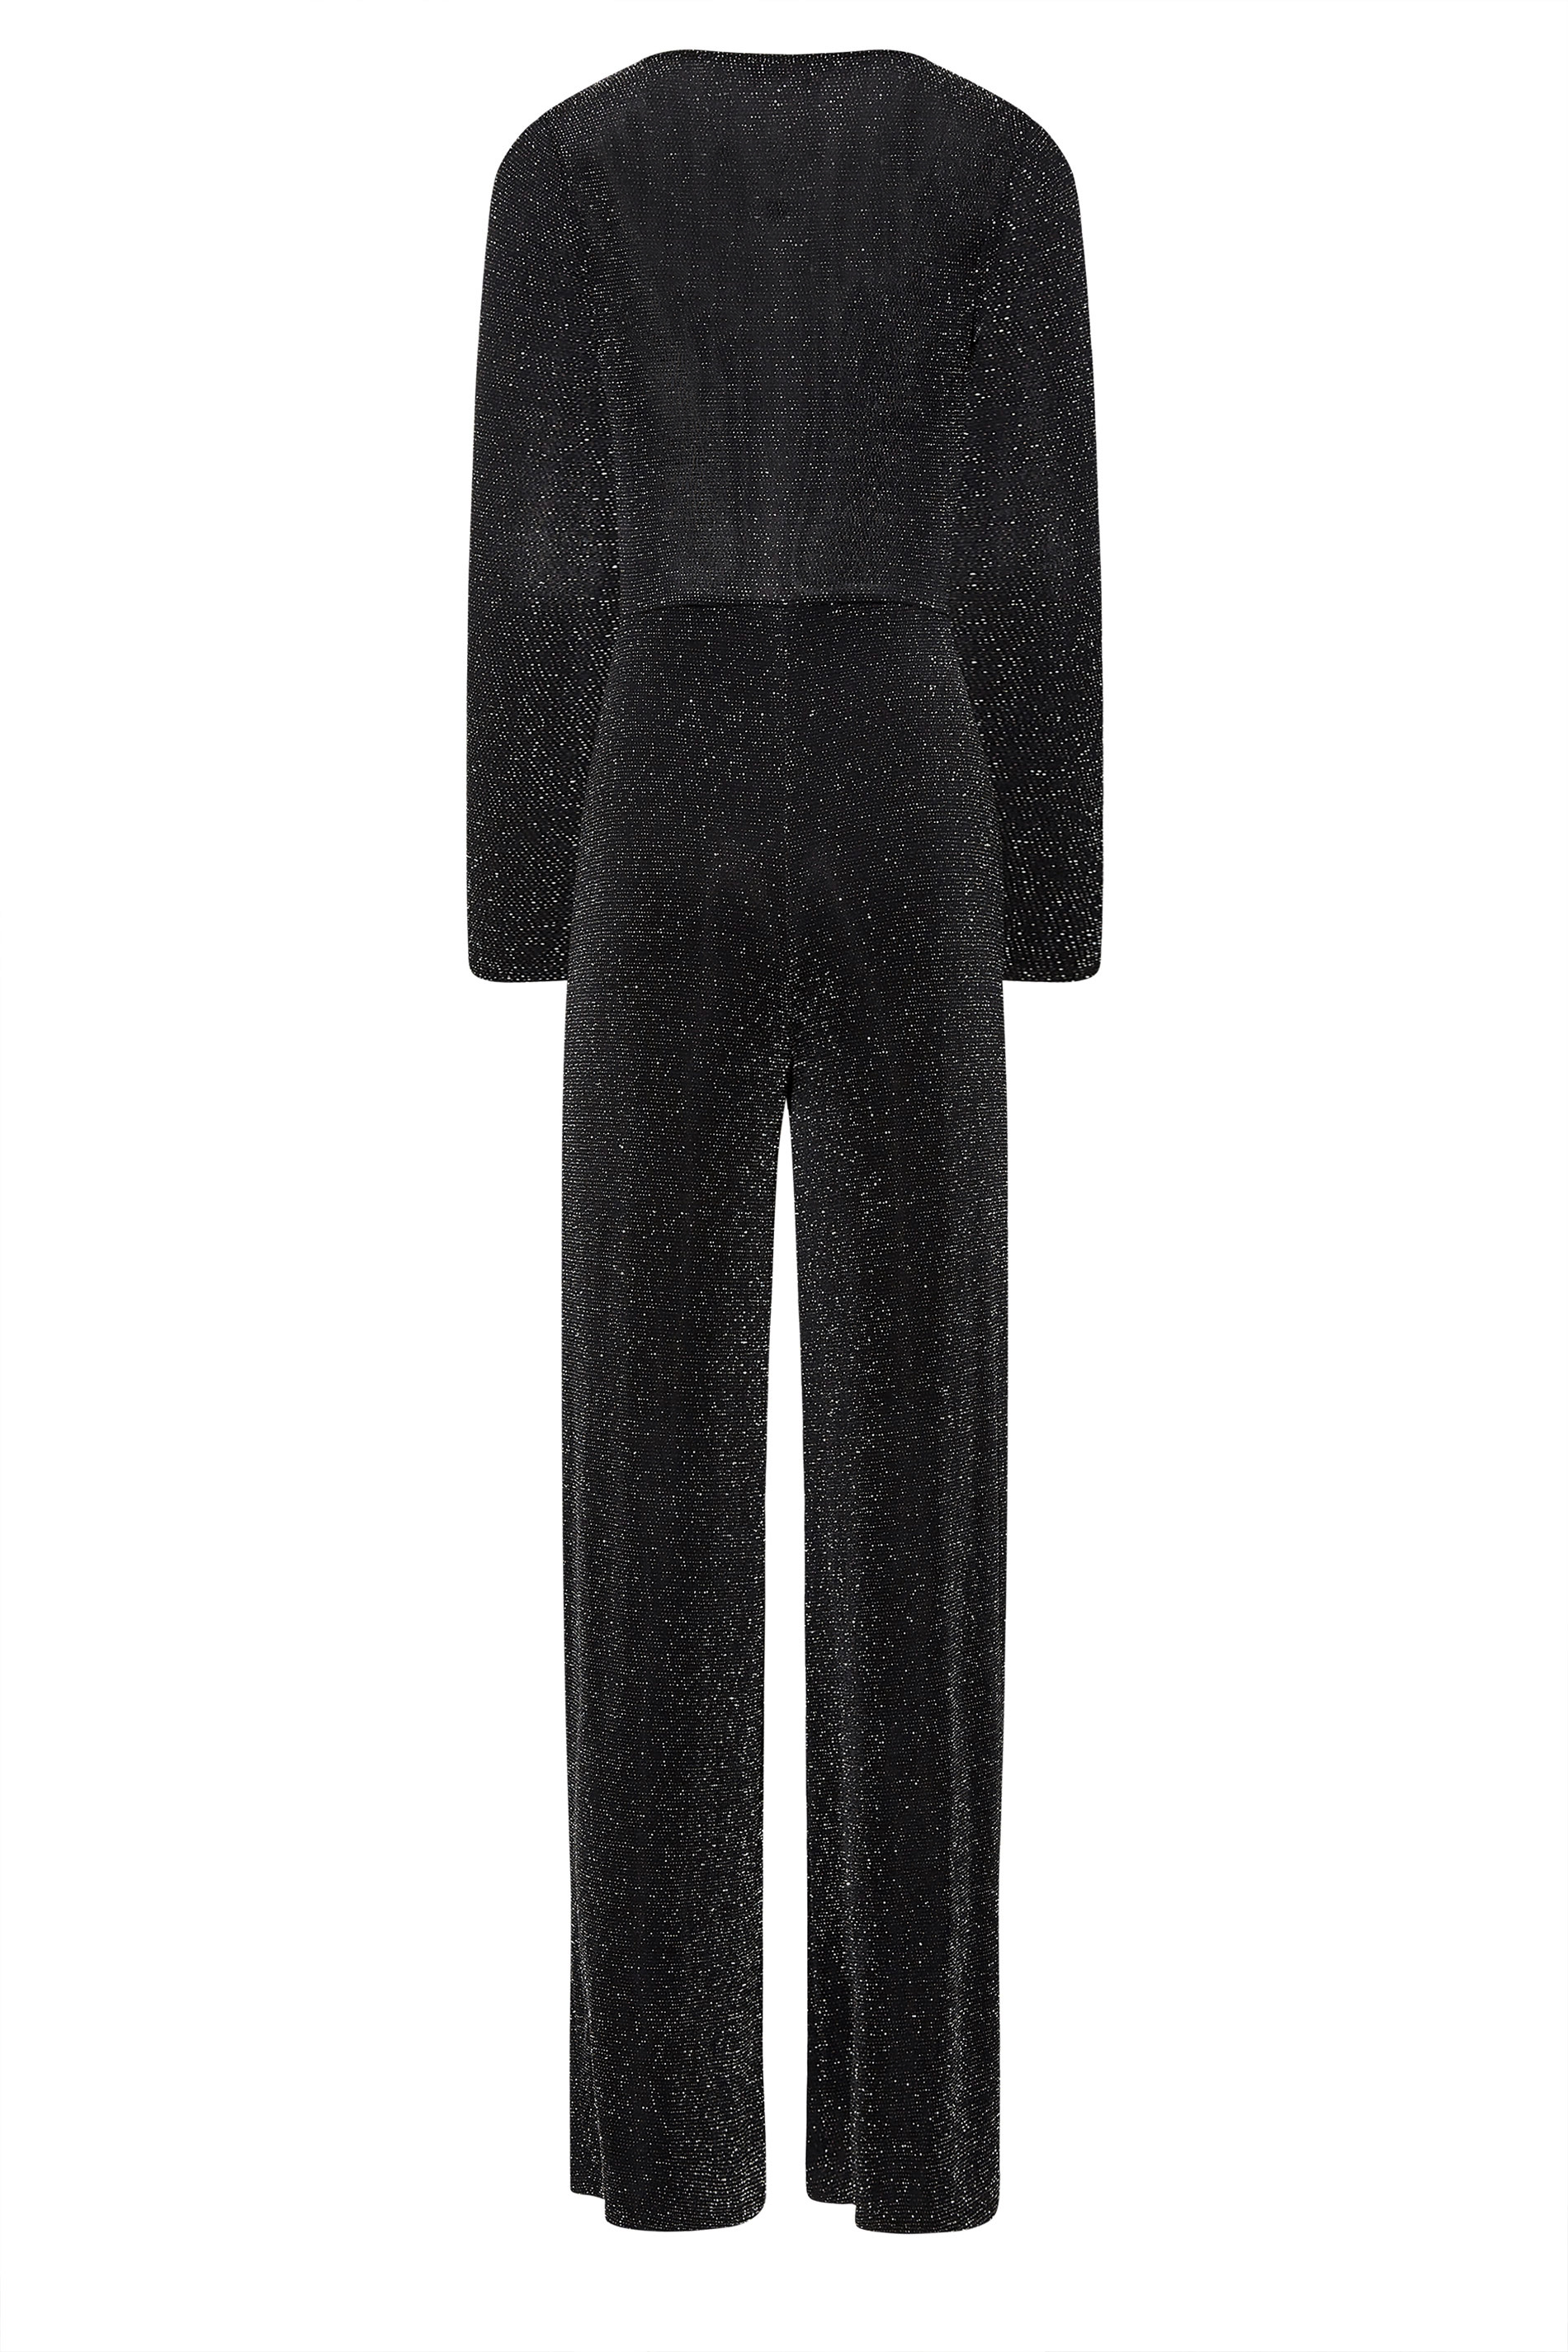 LTS Tall Women's Black & Silver Glitter Wrap Jumpsuit | Long Tall Sally 3